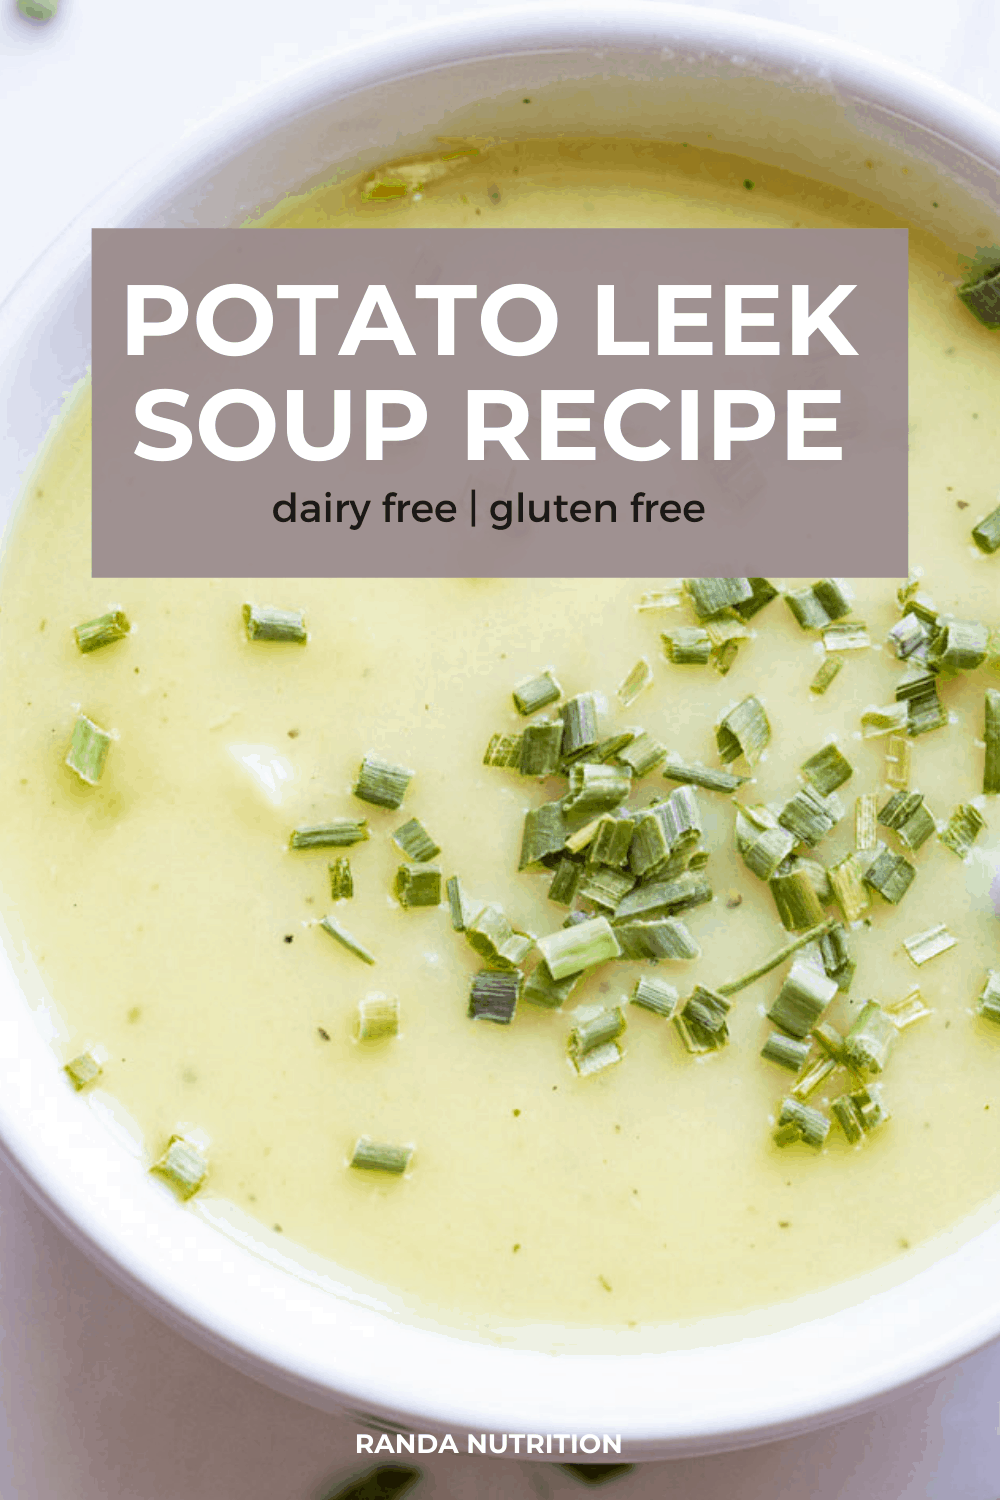 How To Make Dairy-Free Potato Leek Soup | Randa Nutrition